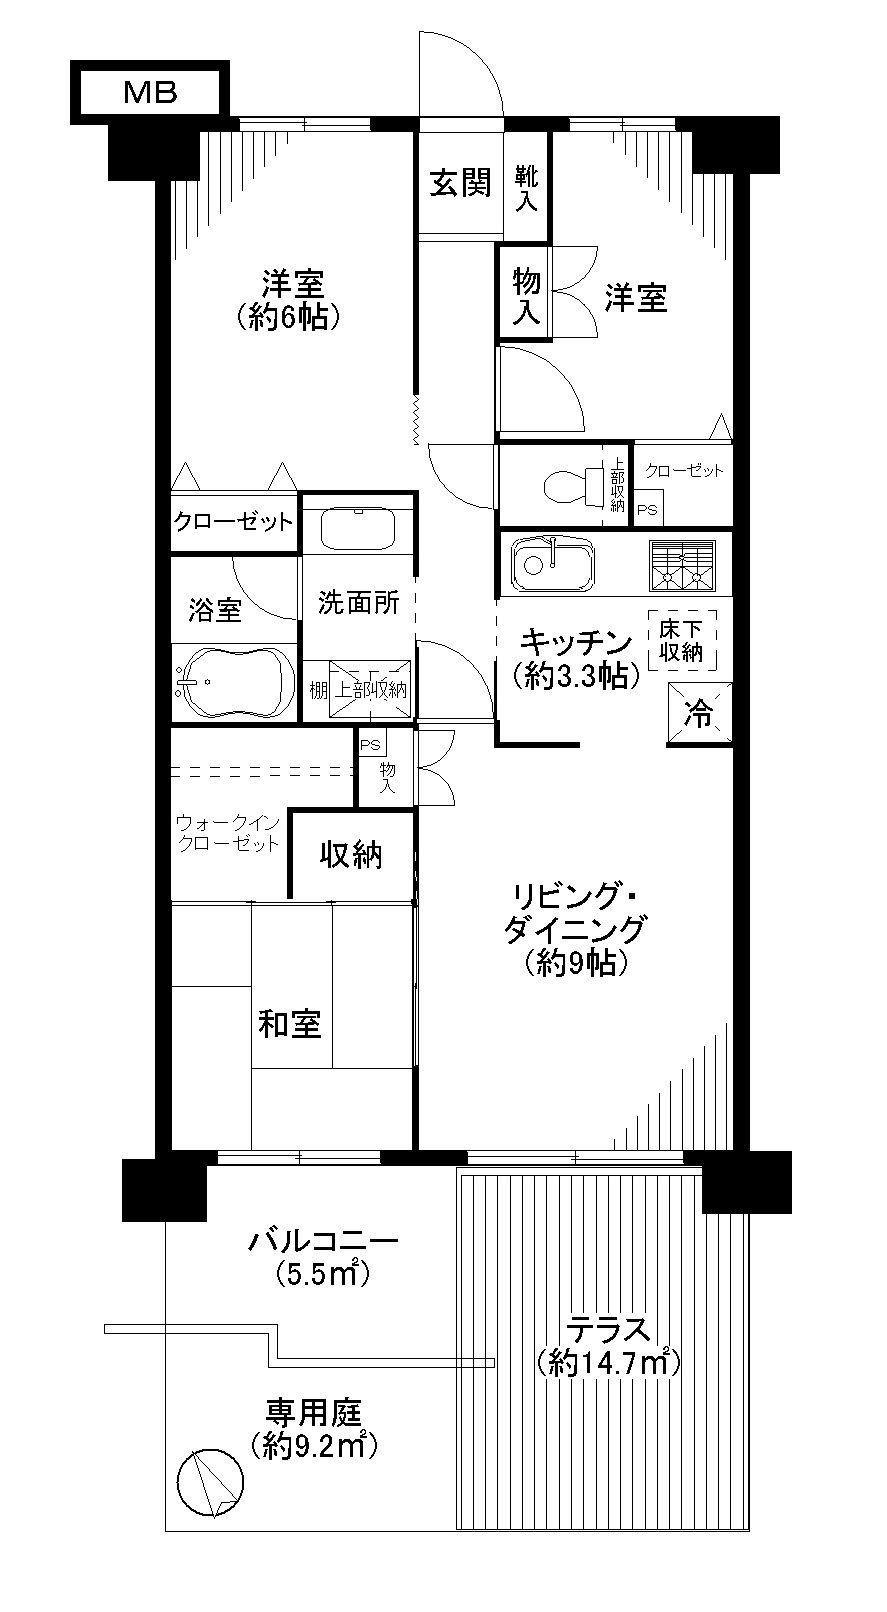 Floor plan. 3LDK, Price 29,800,000 yen, Footprint 63.6 sq m , Balcony area 20.2 sq m